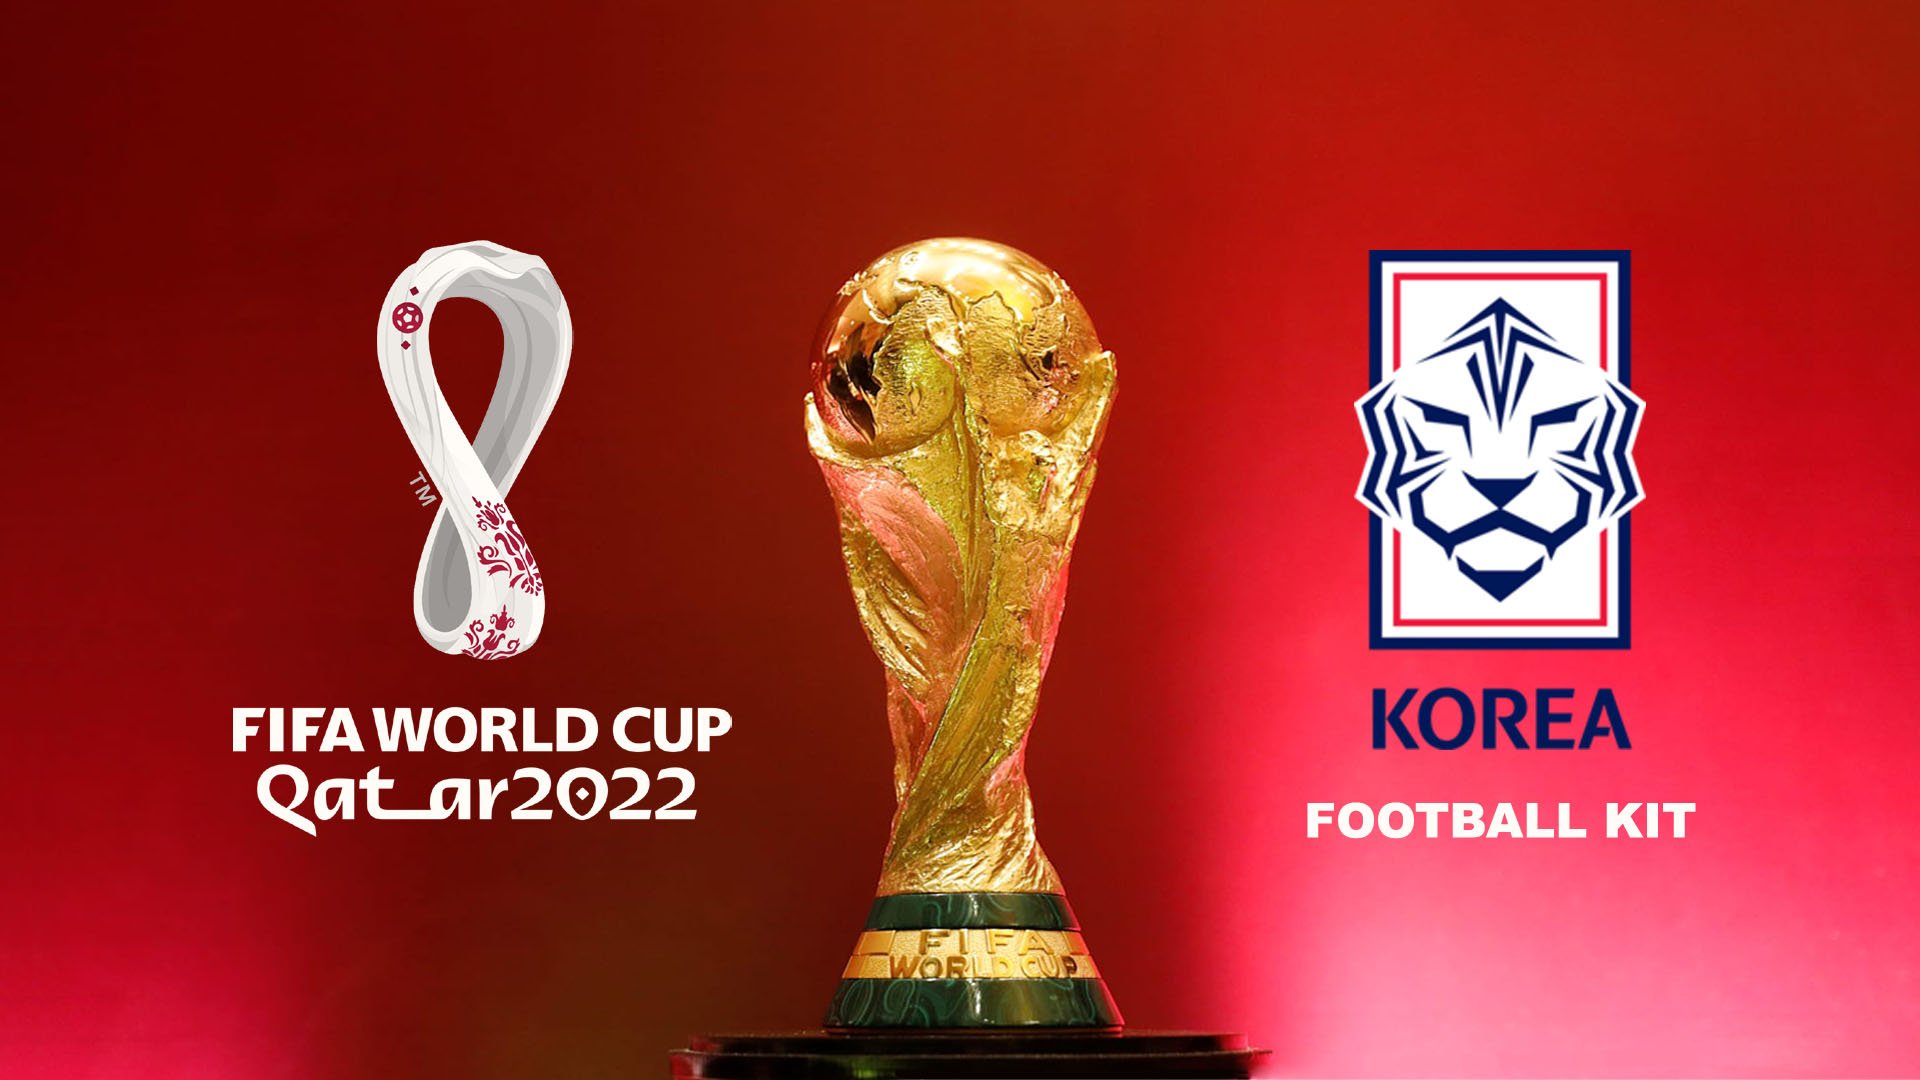 South Korea Kit World Cup 2022